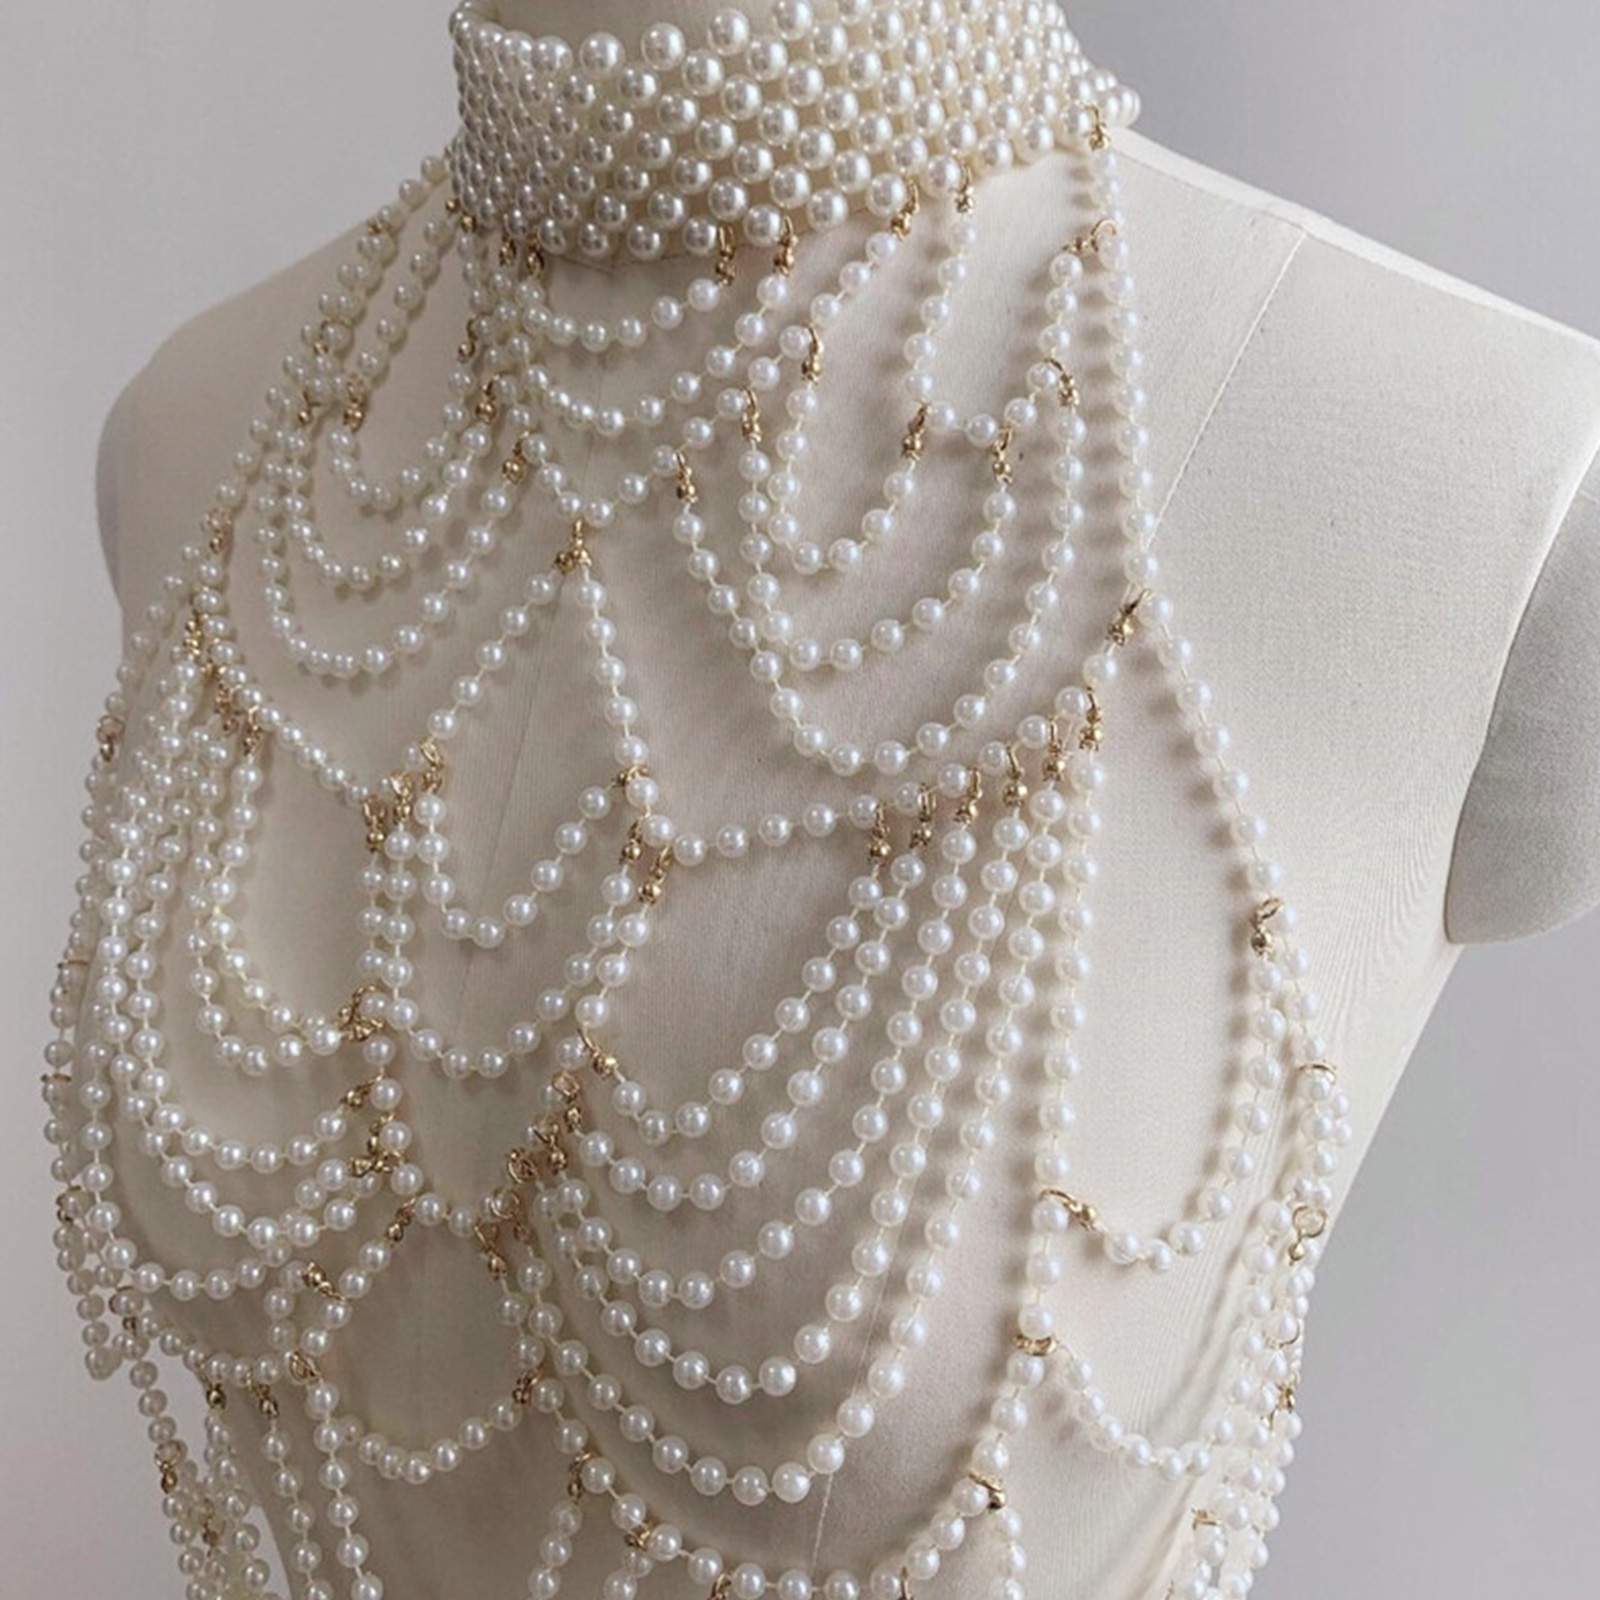 CHAOMA Women Layered Pearl Body Chain Choker Necklace Harness Sexy Bikini Body Jewelry - image 2 of 11